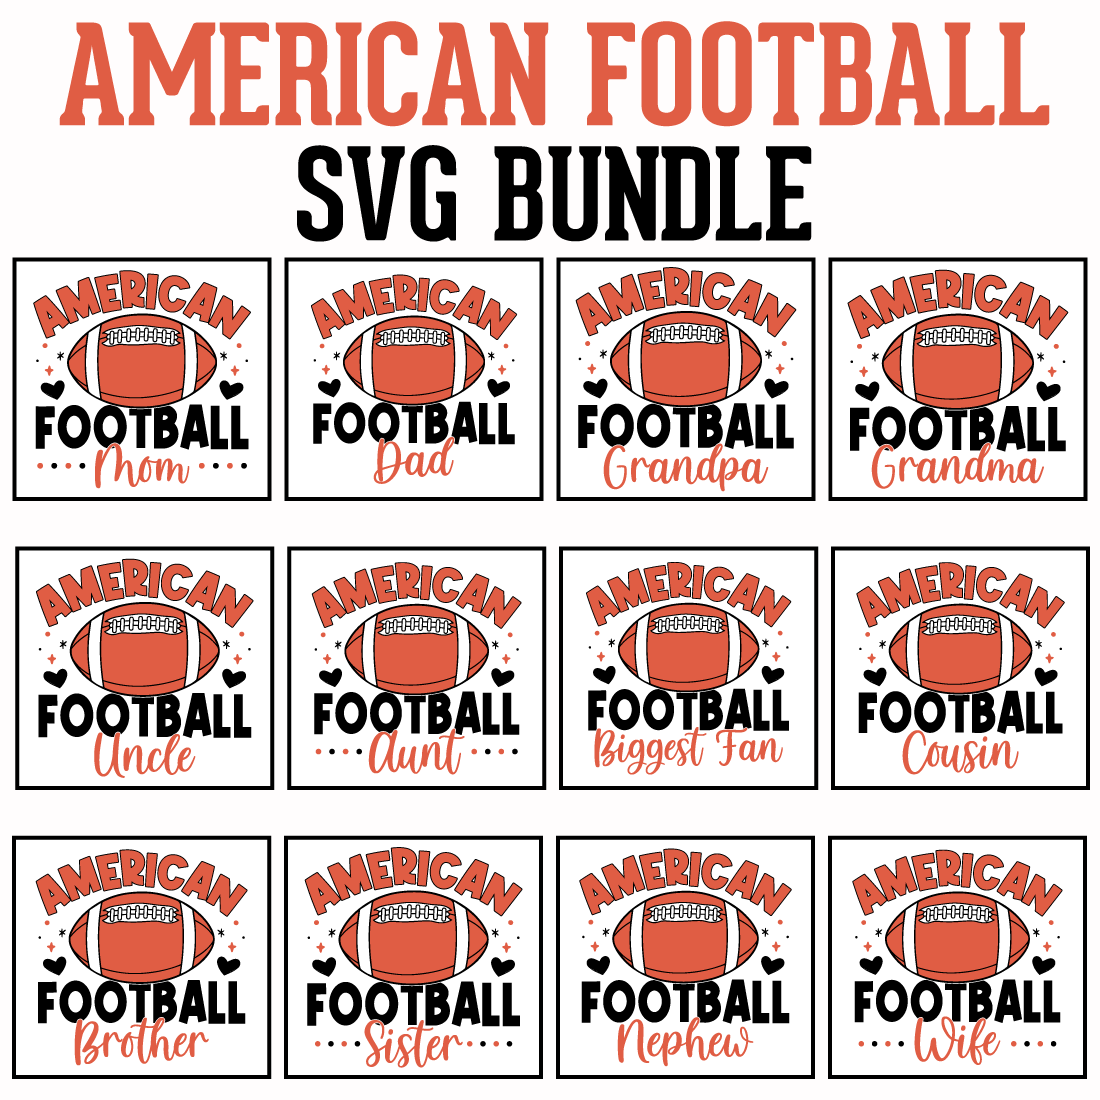 American Football | American Football t-shirt design | American Football sayings | American Football SVG | American Football SVG Bundle cover image.